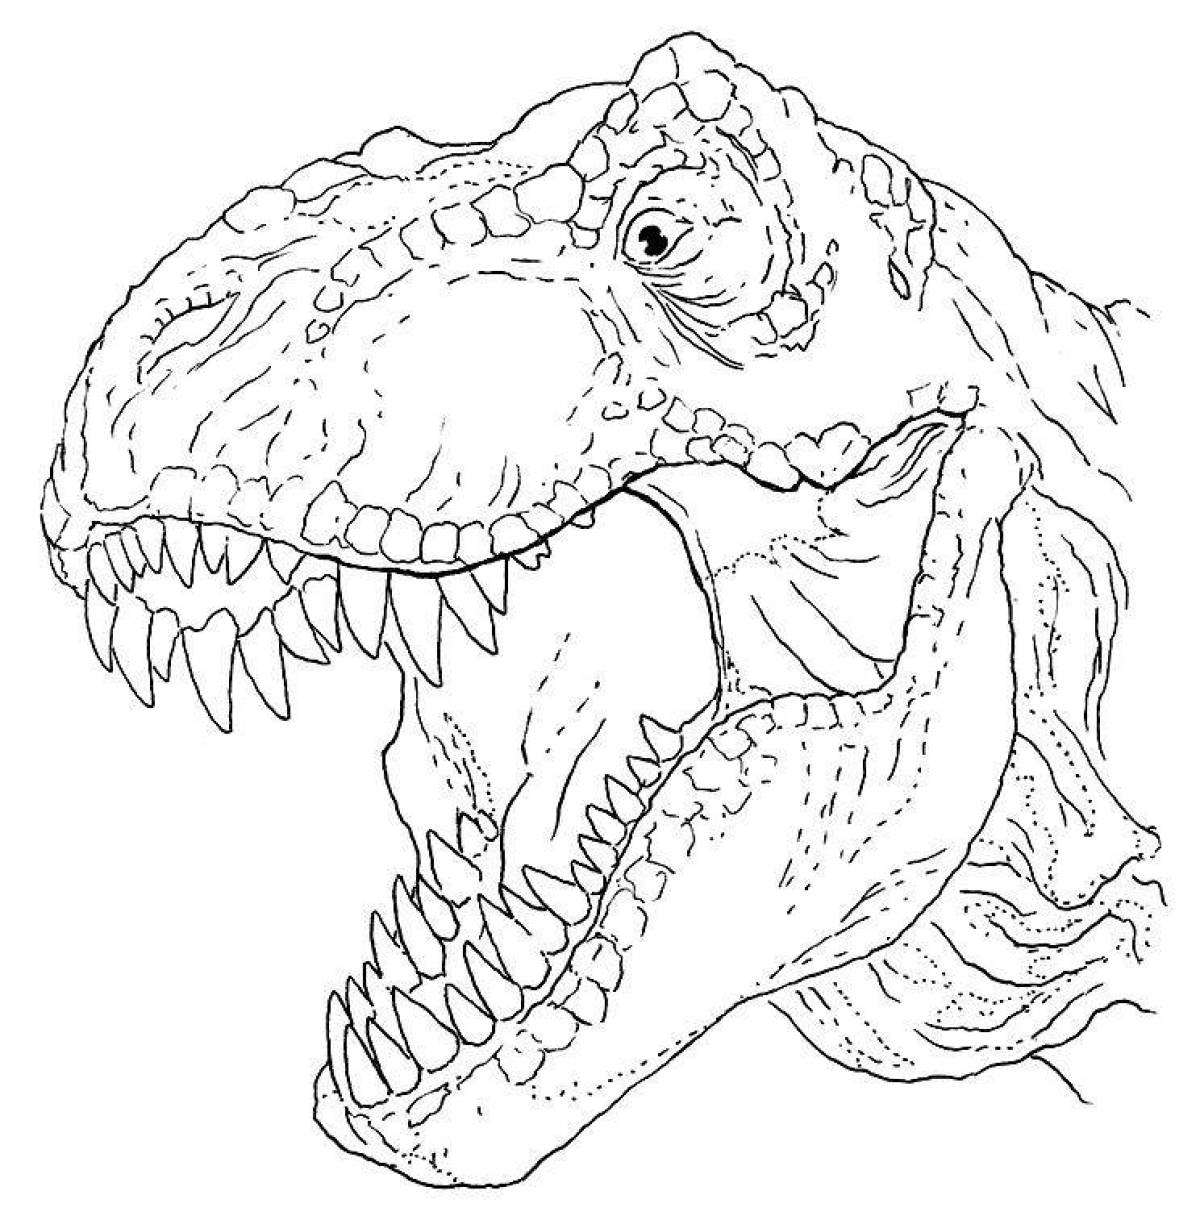 Amazing tirex dinosaur coloring page